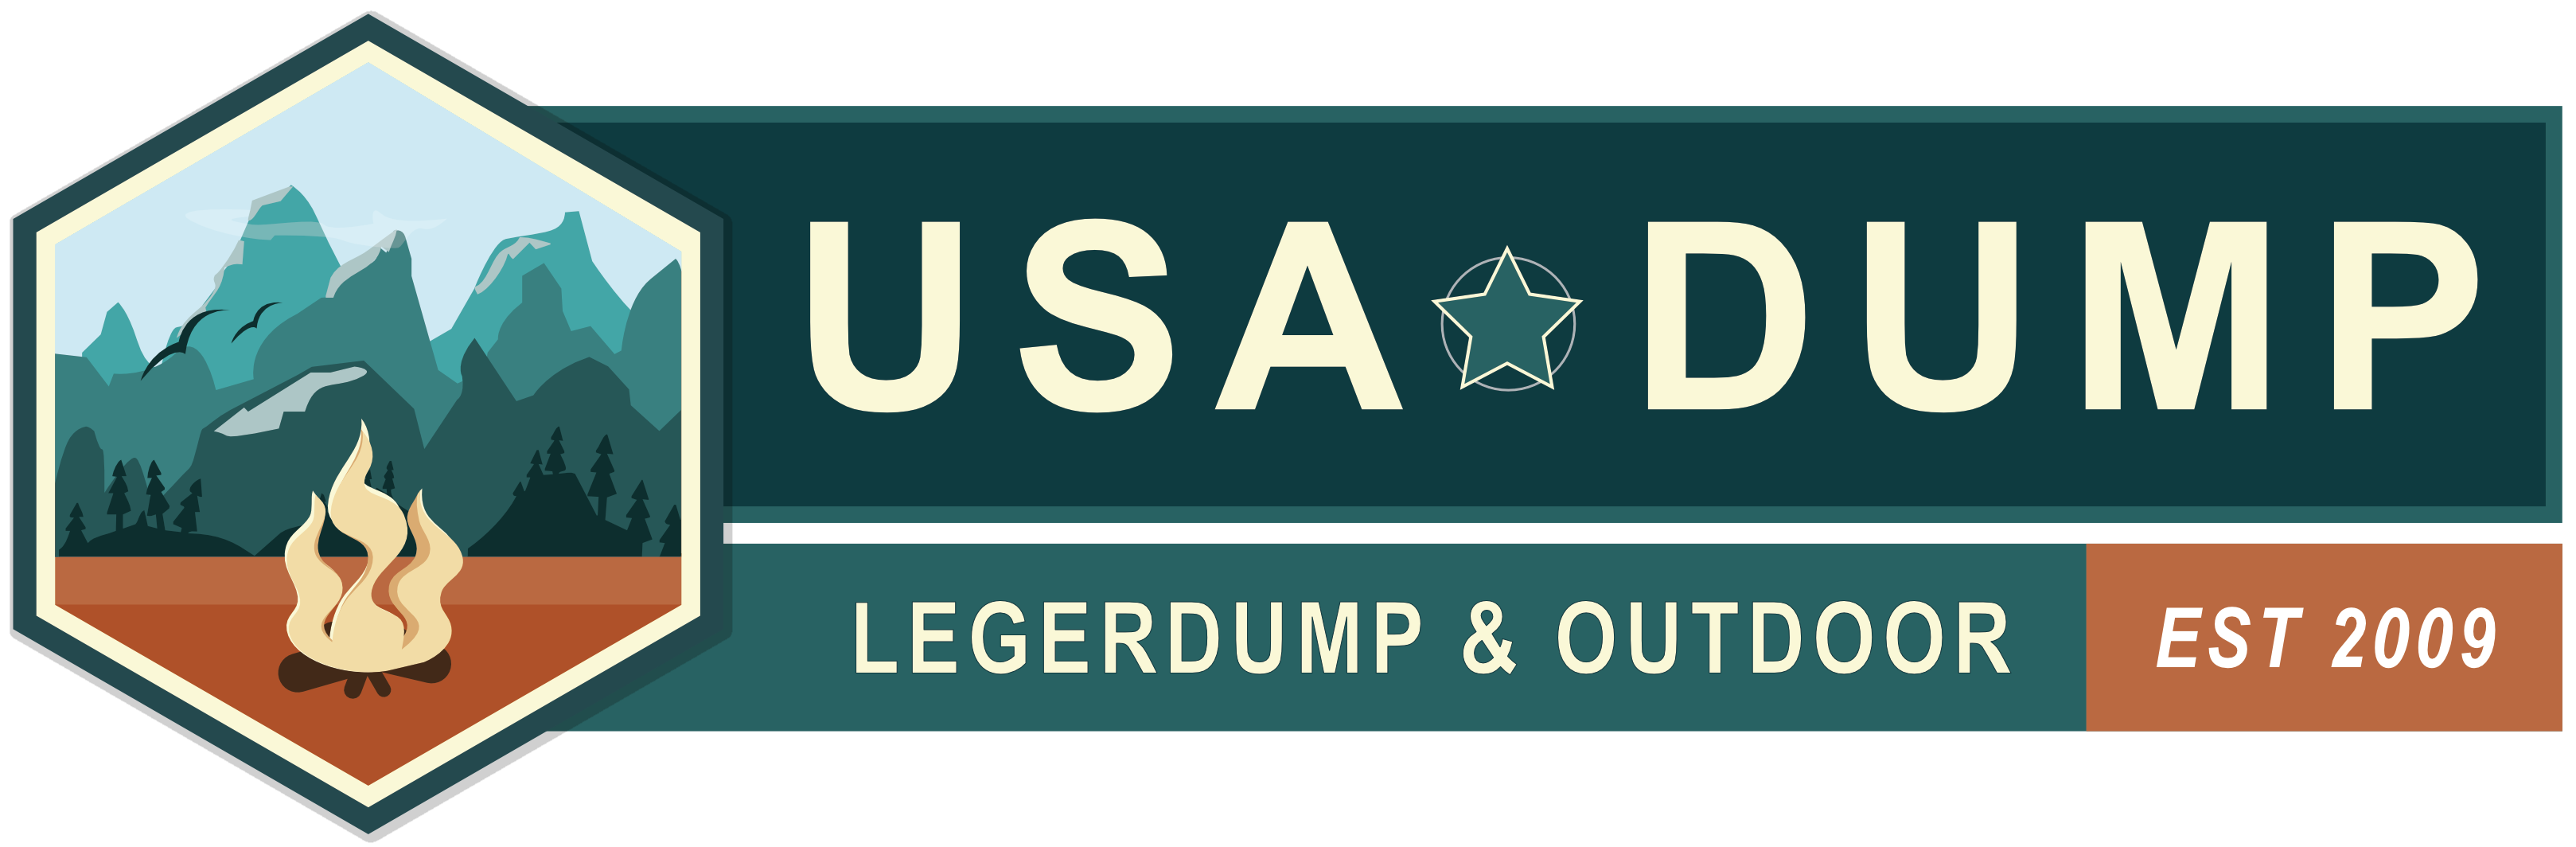 B2B Legerdump | USADUMP